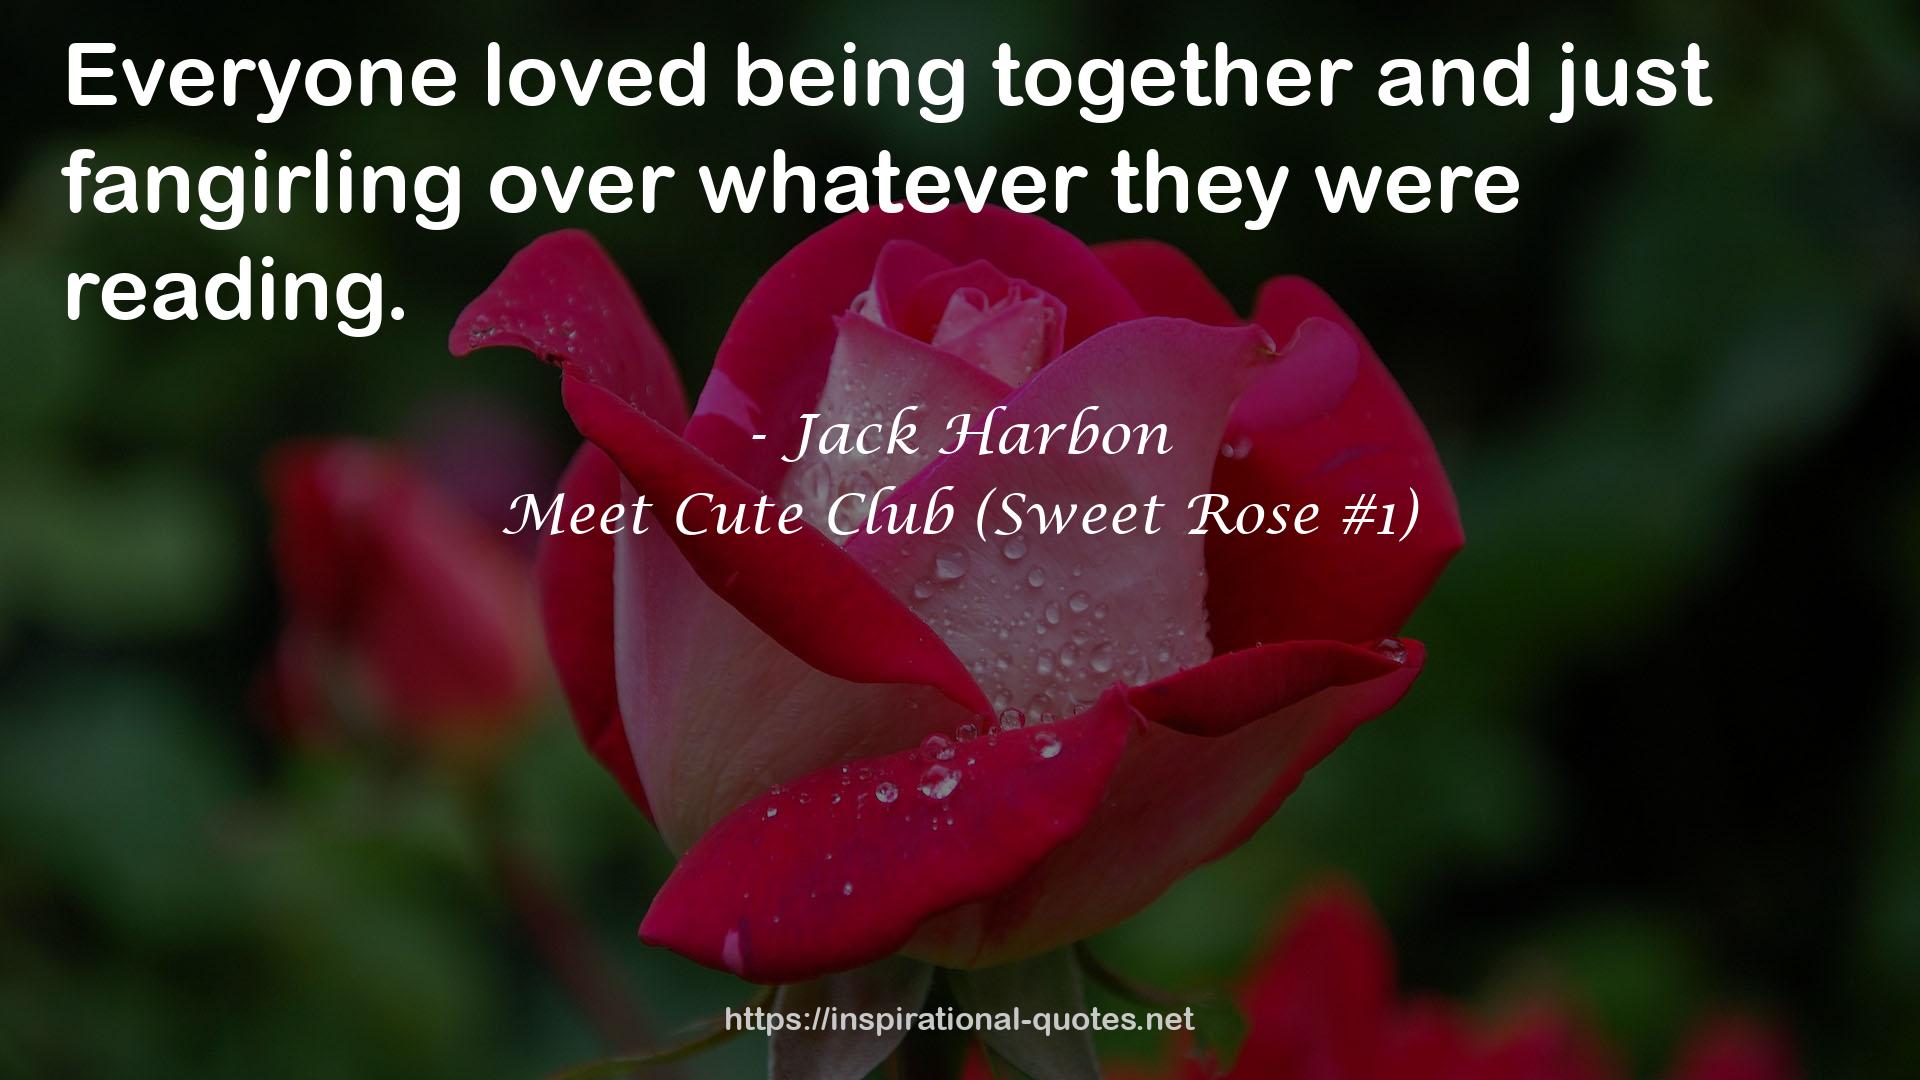 Meet Cute Club (Sweet Rose #1) QUOTES